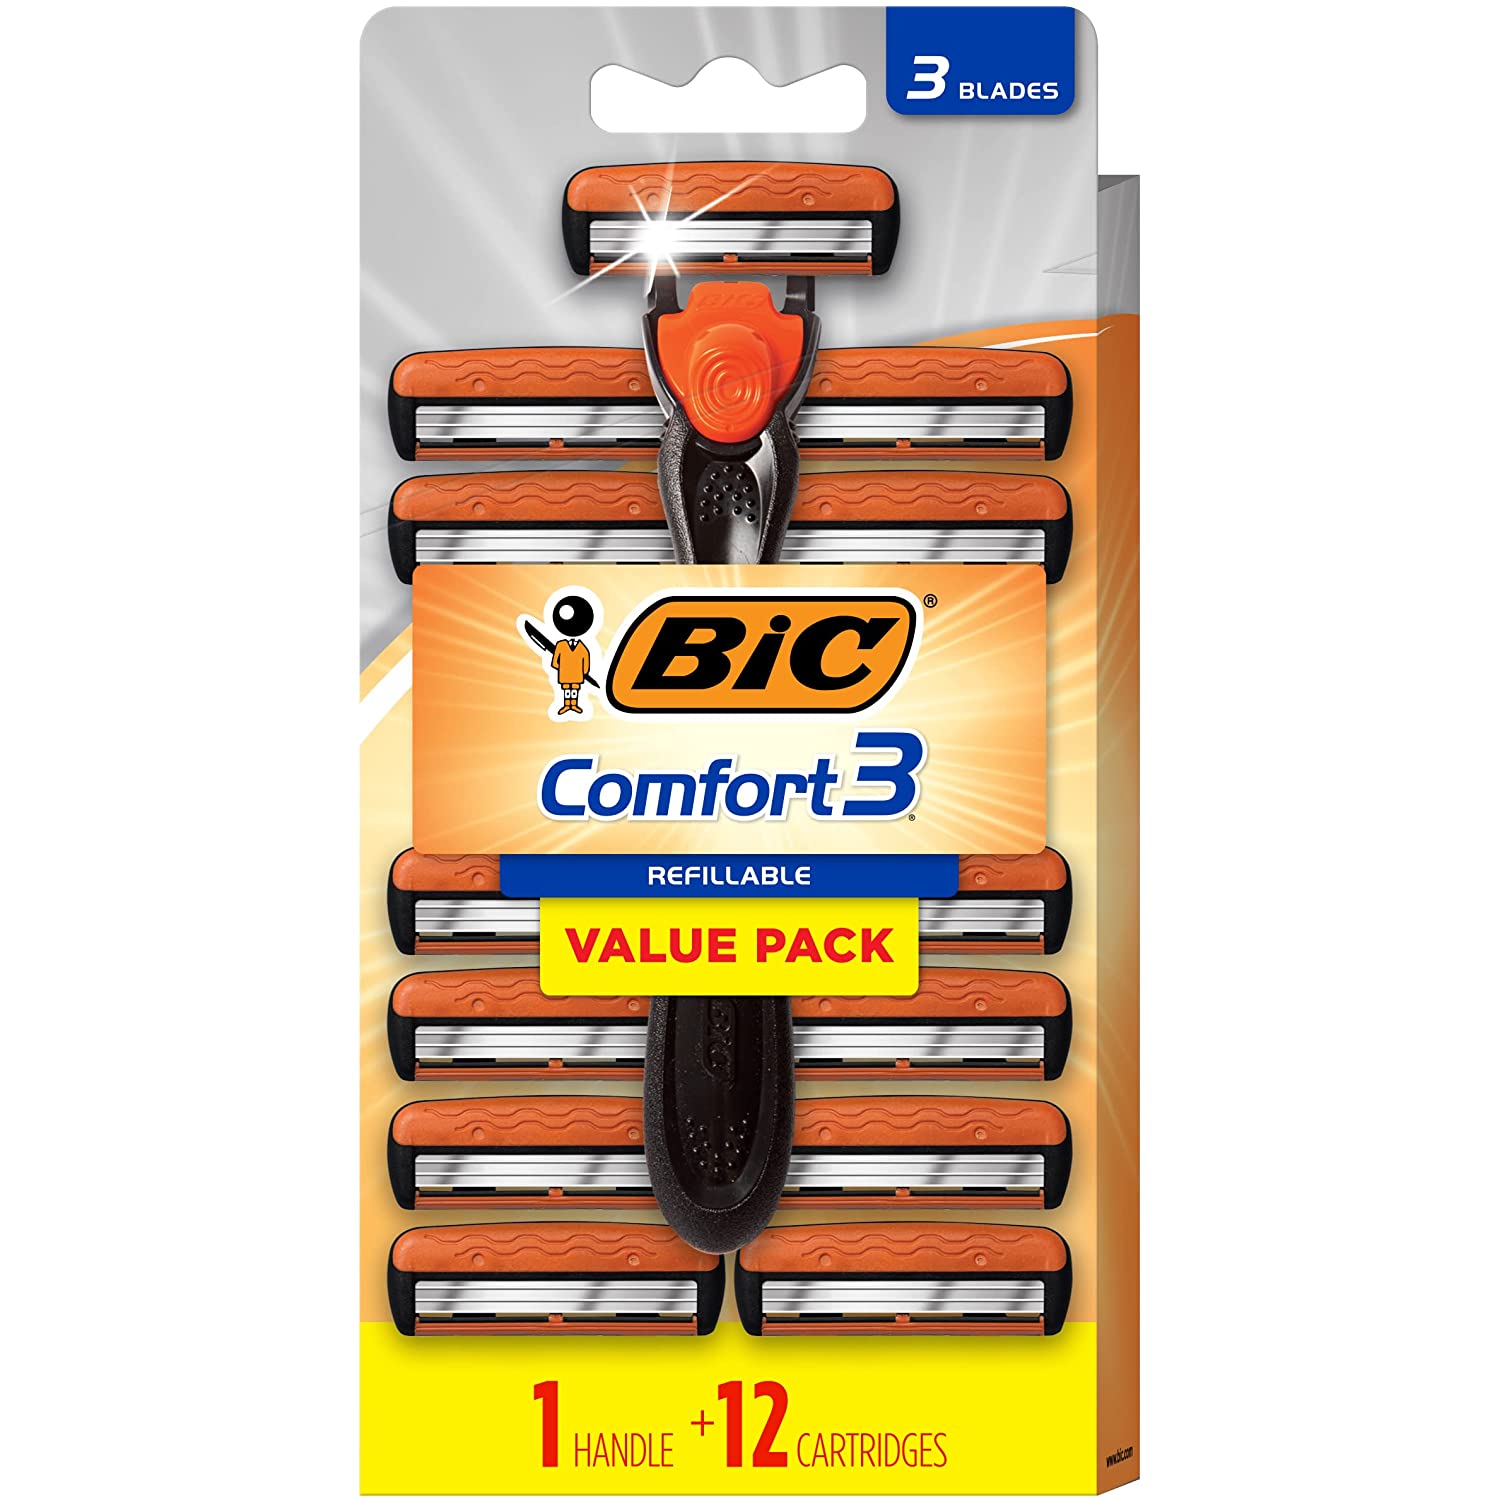 YMMV, 1 handle + 12 cartridges Bic comfort 3 razors, $6.44 w/ coupon and S&S, 1 handle + 7 cartridges BIC hybrid flex 5 titanium, $7.48, + more, Amazon $6.44